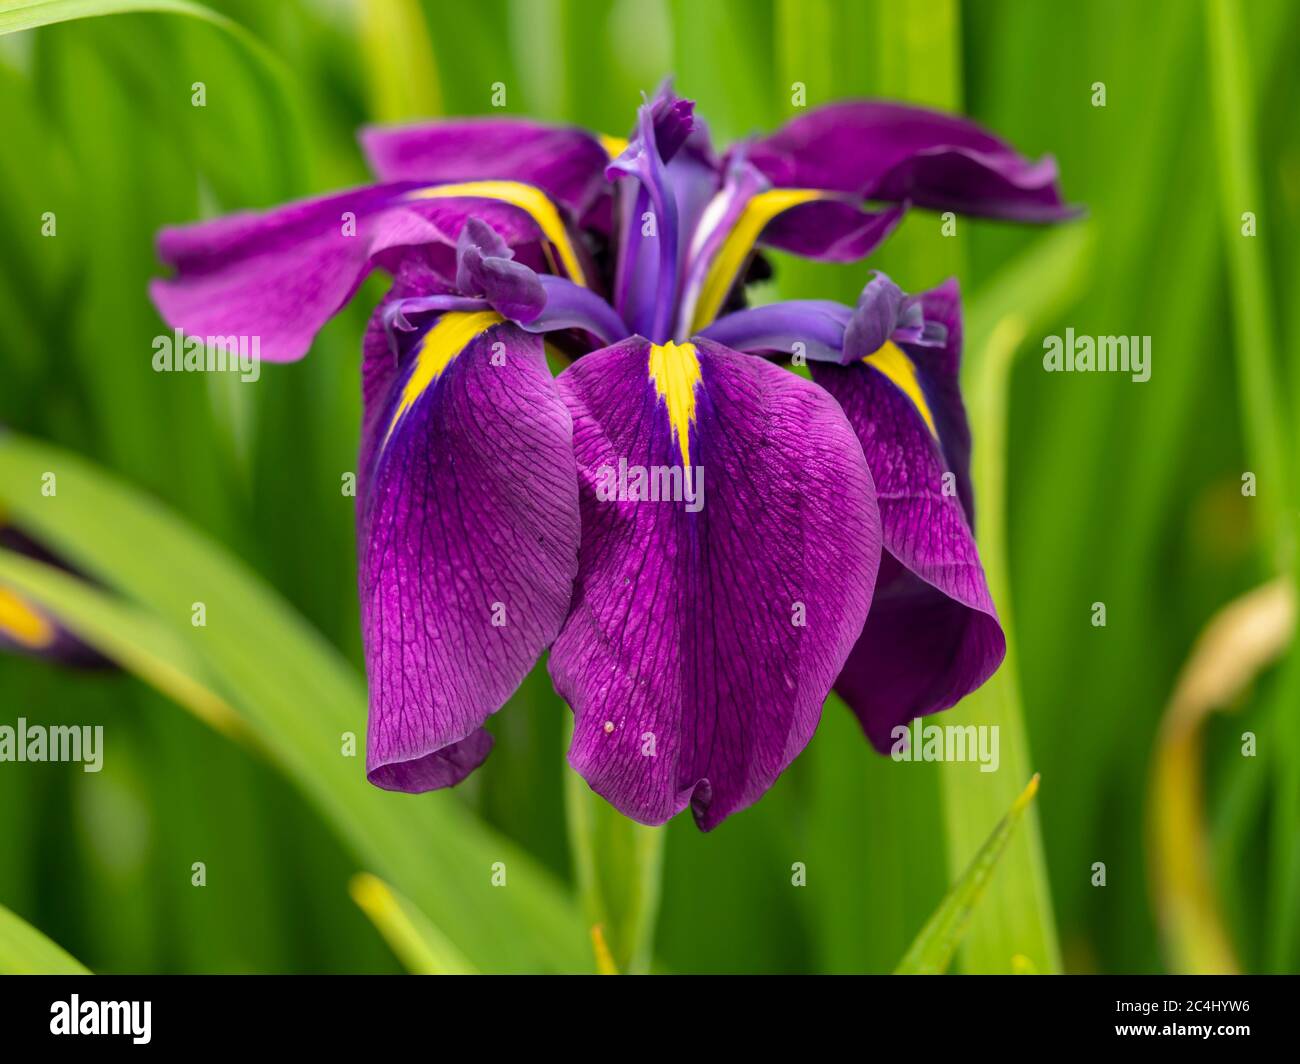 Closeup of a beautiful purple and yellow Japanese water iris, Iris ensata, flowering in a garden Stock Photo